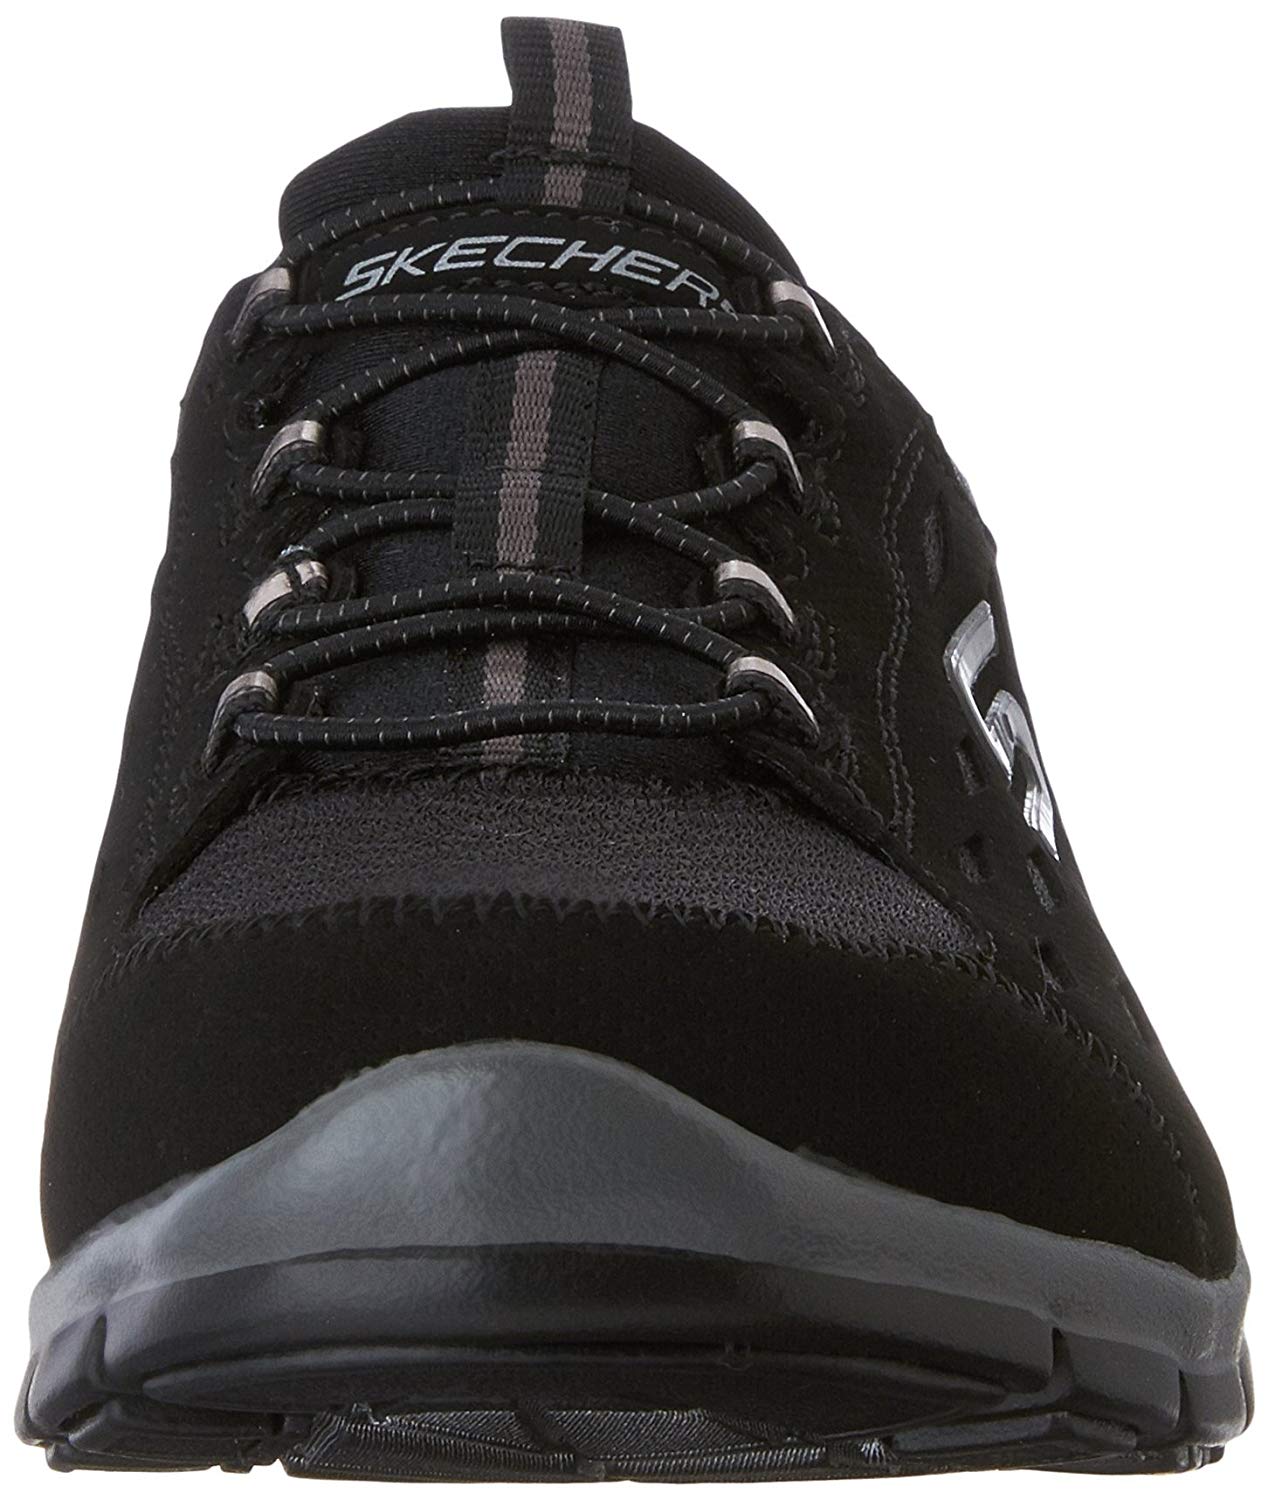 Skechers Women's Shoes Full Circle, Black/Black, Size 8.5 1Hbv | eBay